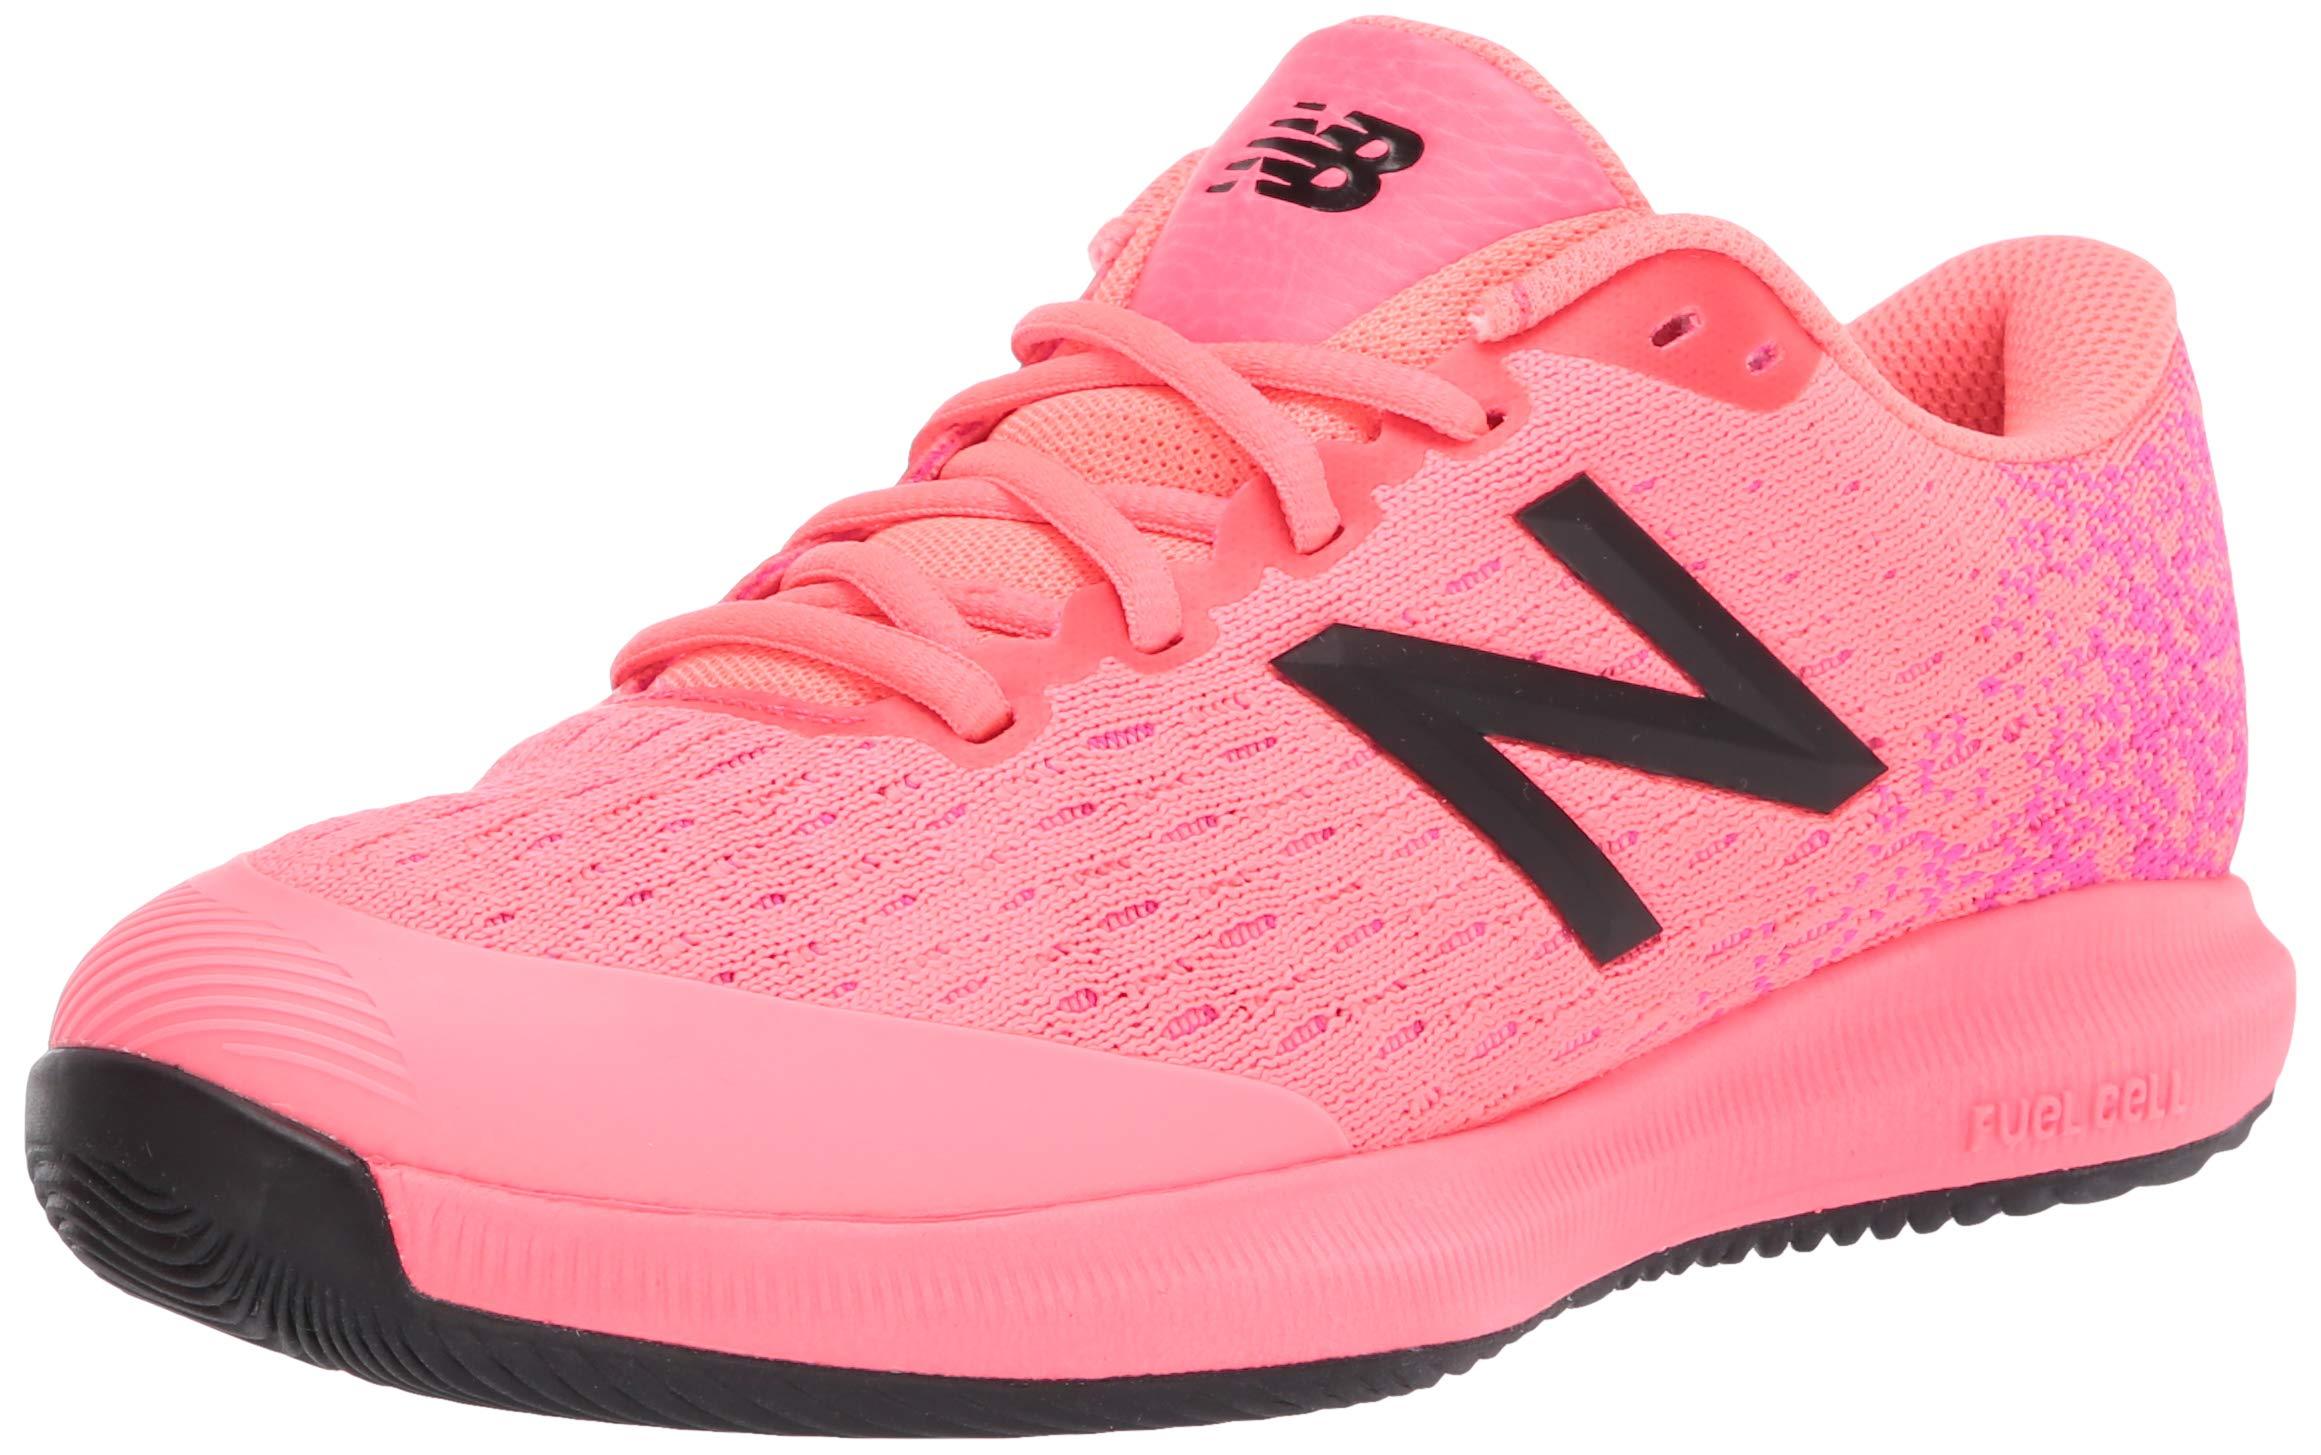 نظارات ارماني رجالي New Balance 996v4 Hard Court Tennis Shoe in Guava/Black (Pink ... نظارات ارماني رجالي